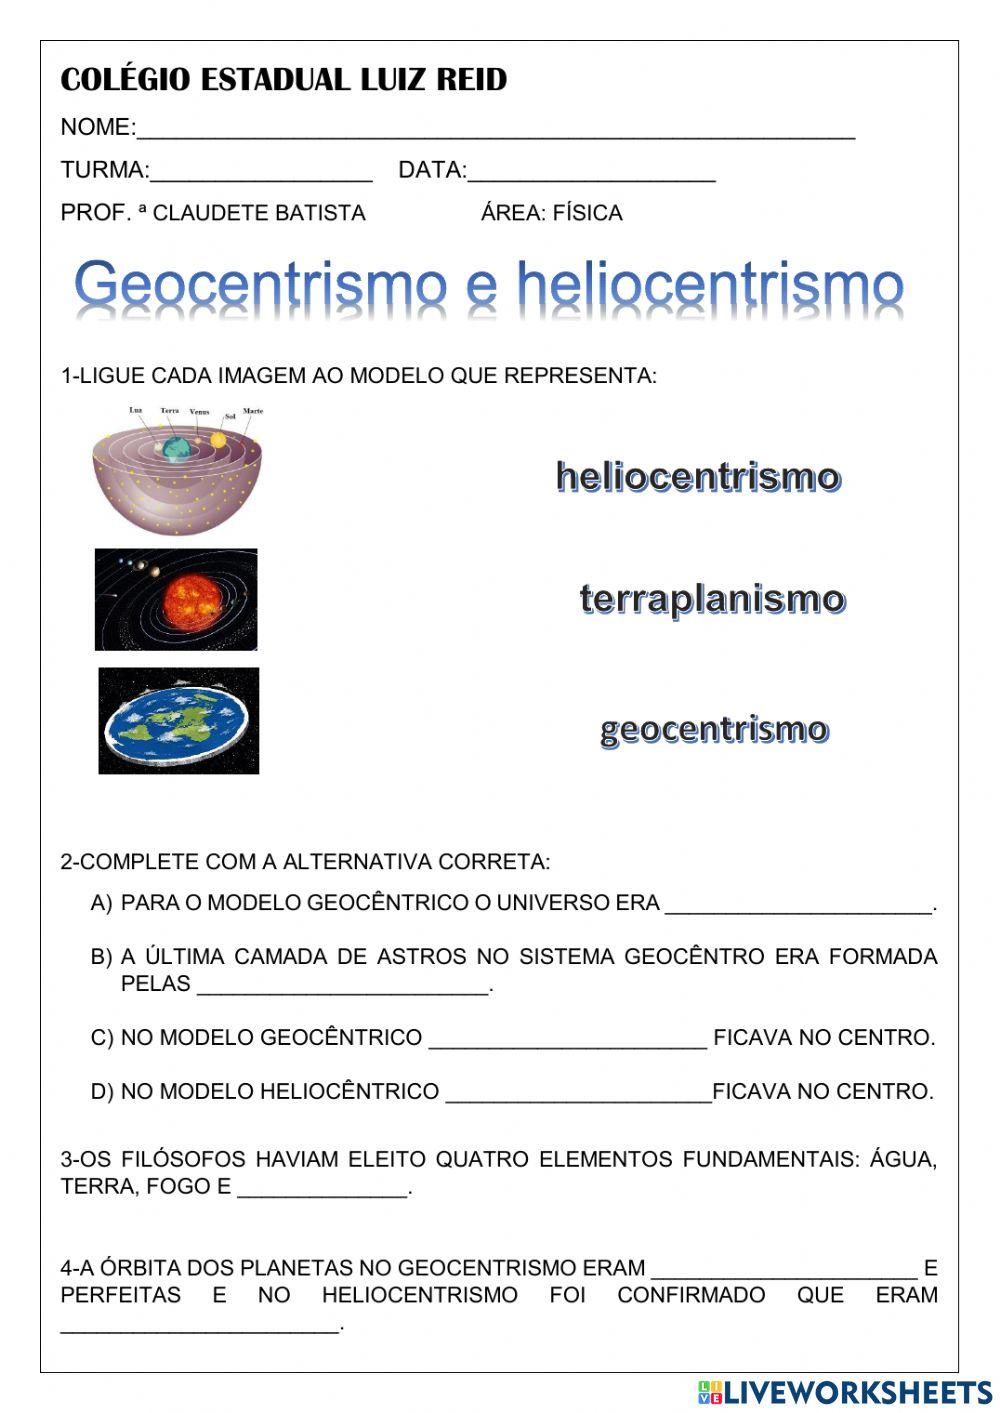 Geocentrismo e heliocentrismo